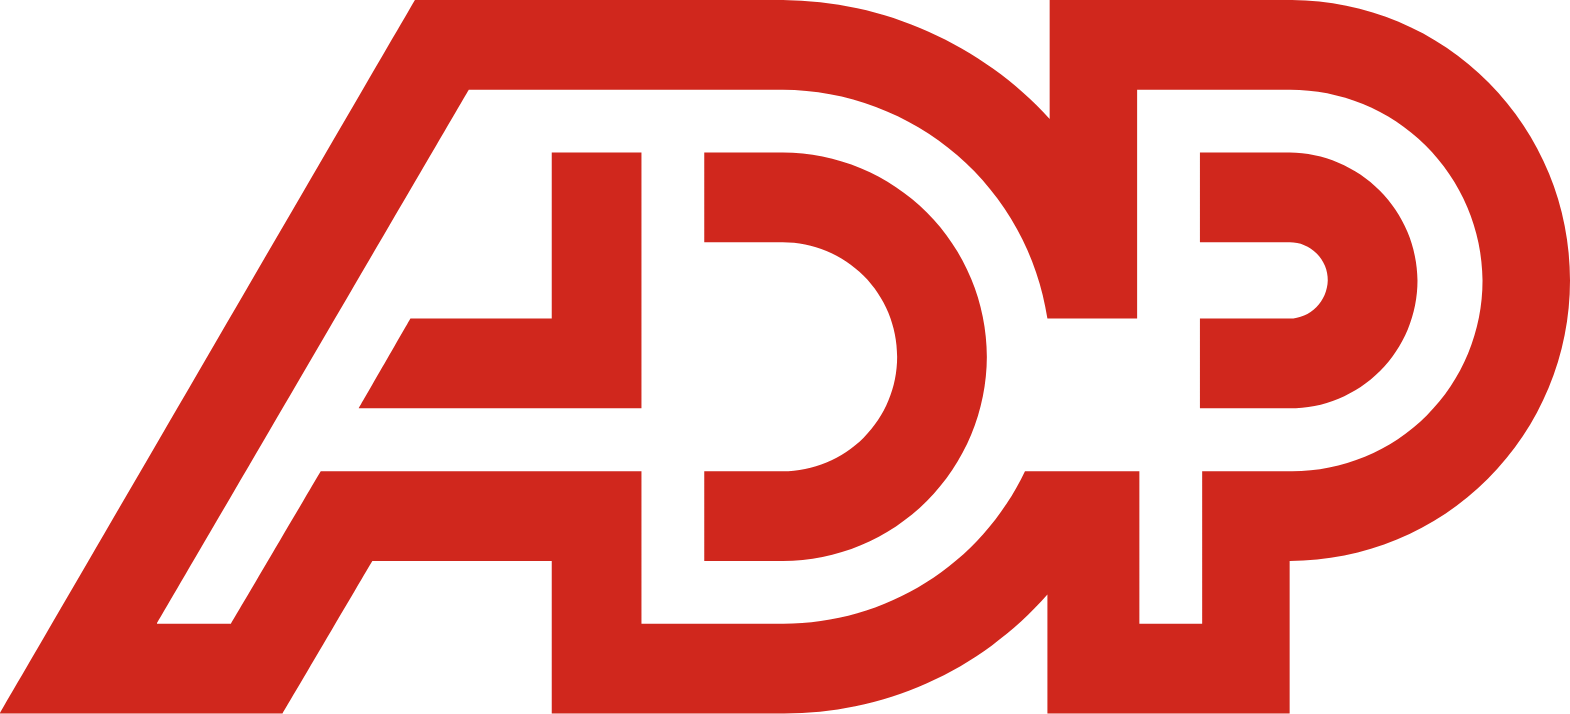 Automatic Data Processing logo (PNG transparent)